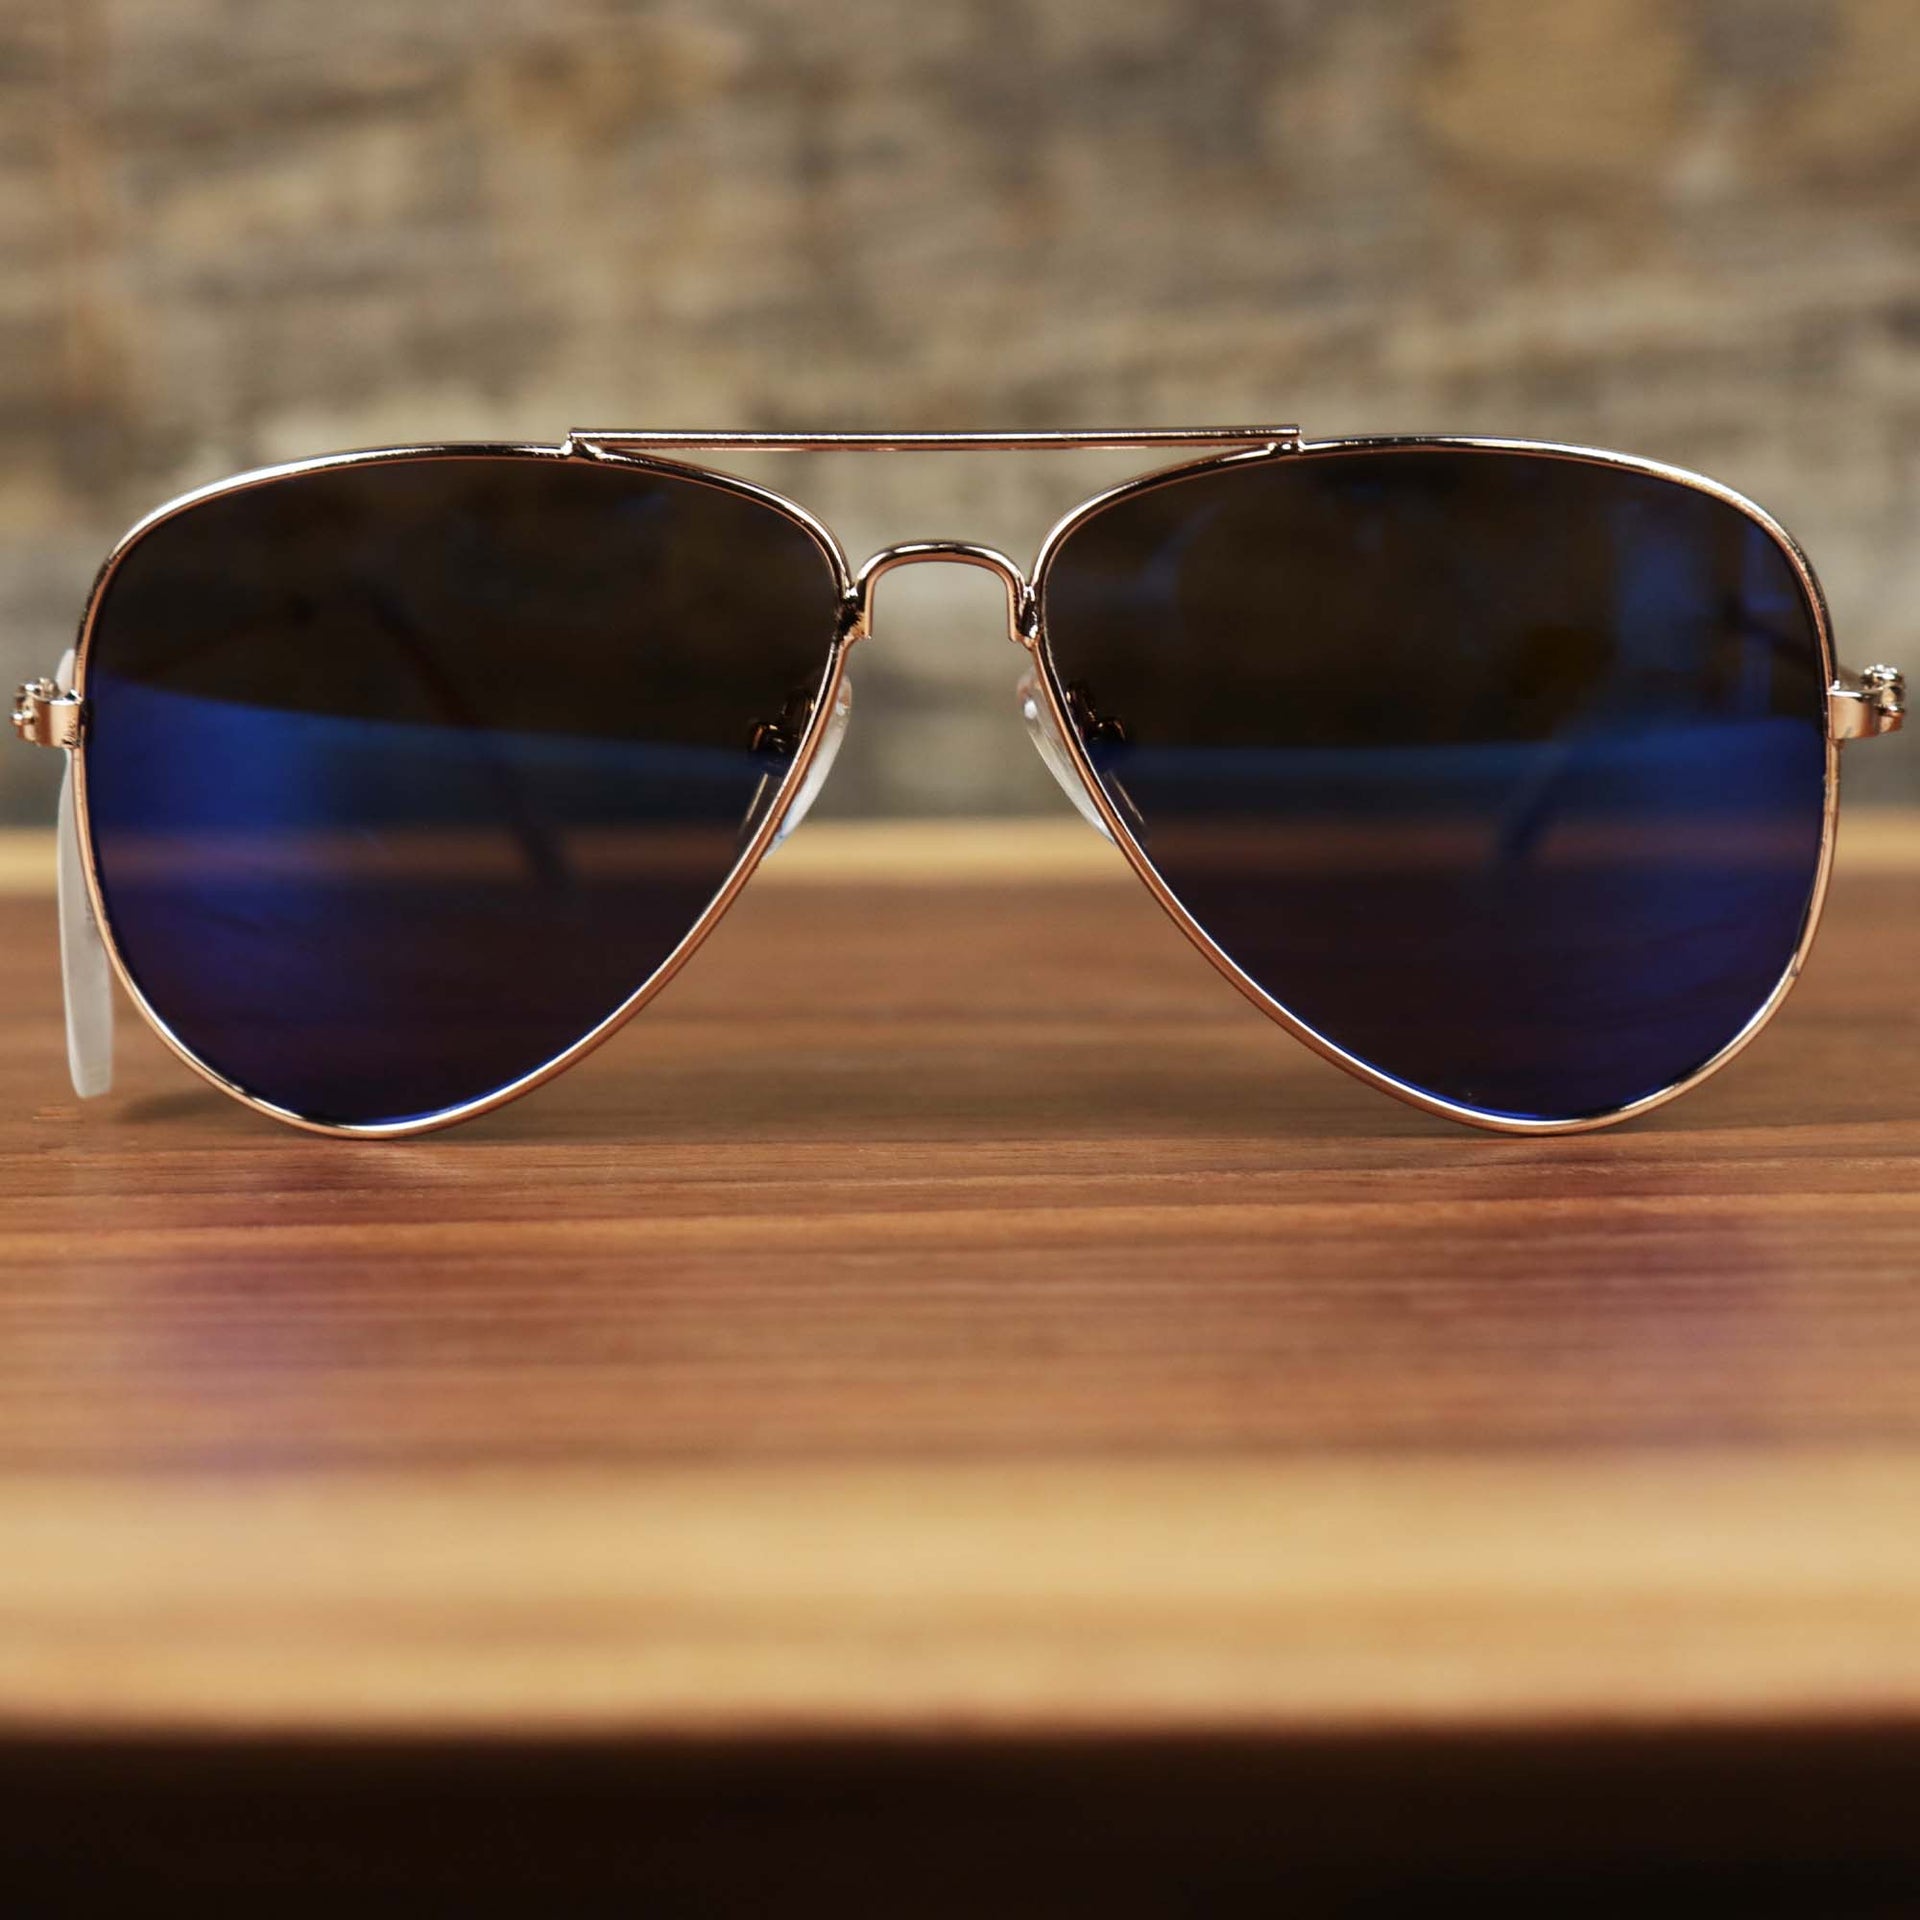 The Kid’s Aviator Frame Blue Lens Sunglasses with Rose Gold Frame